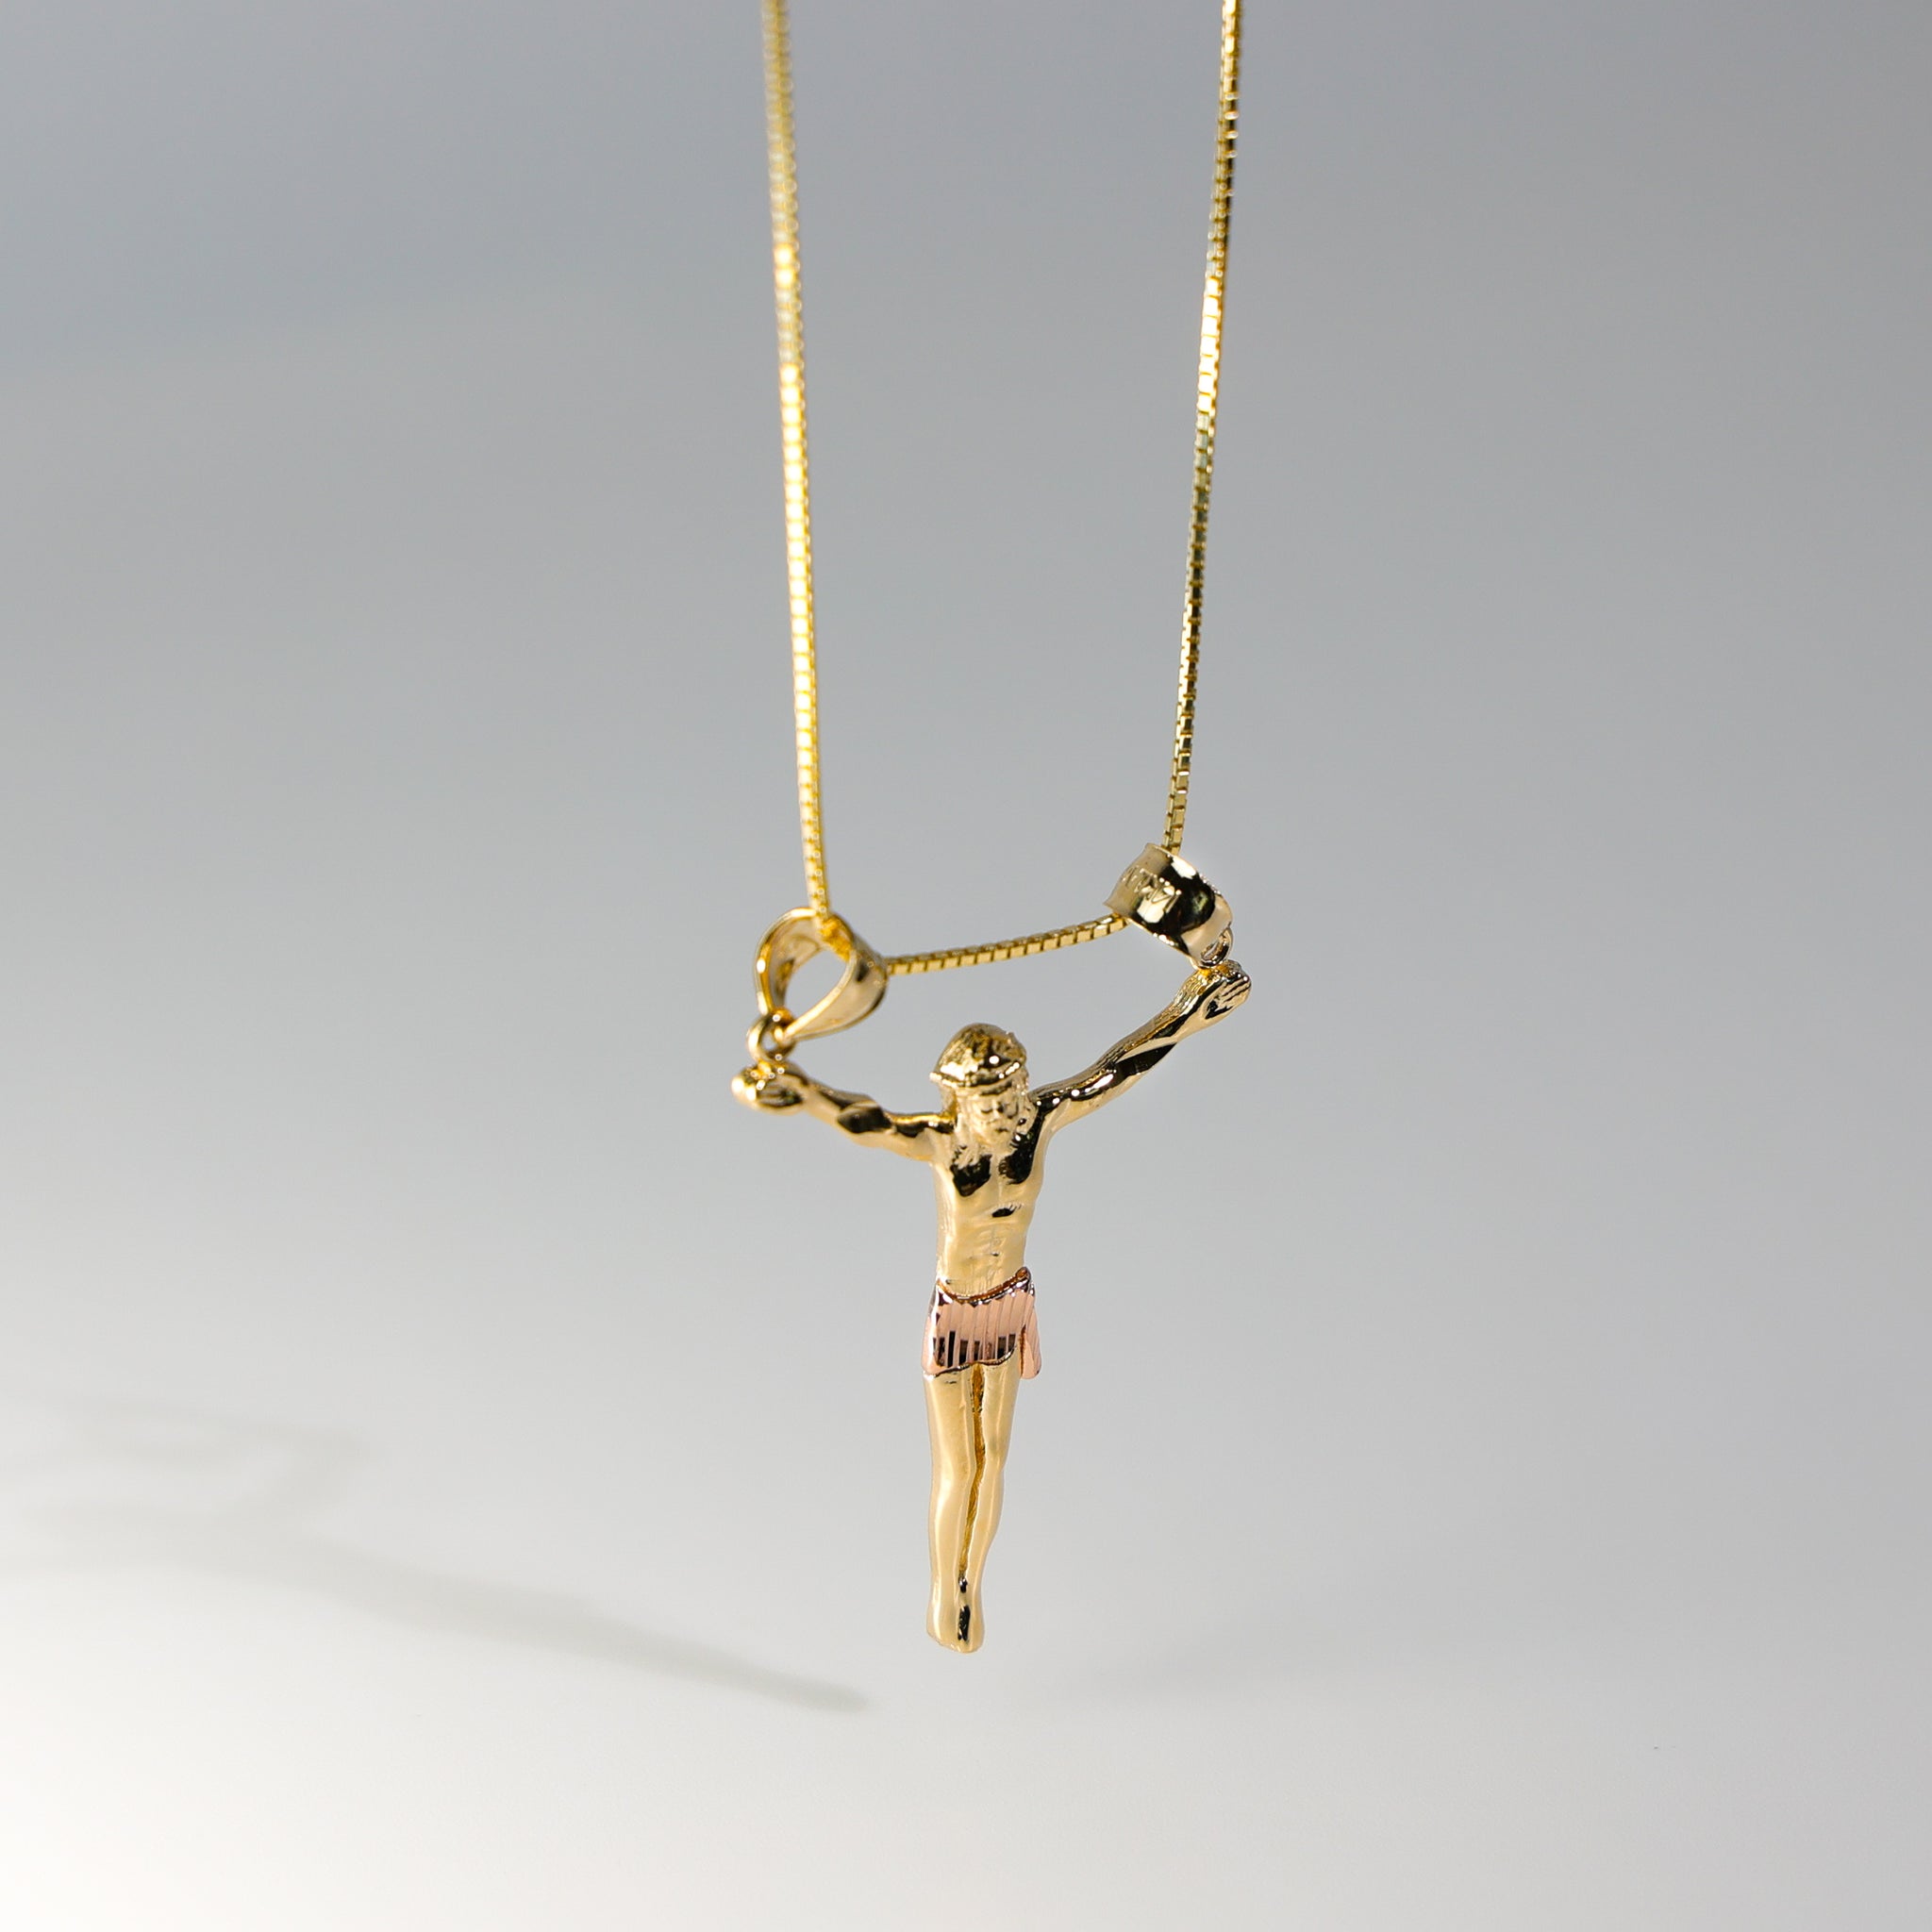 Gold Jesus Christ Body Pendant Model-0087 - Charlie & Co. Jewelry